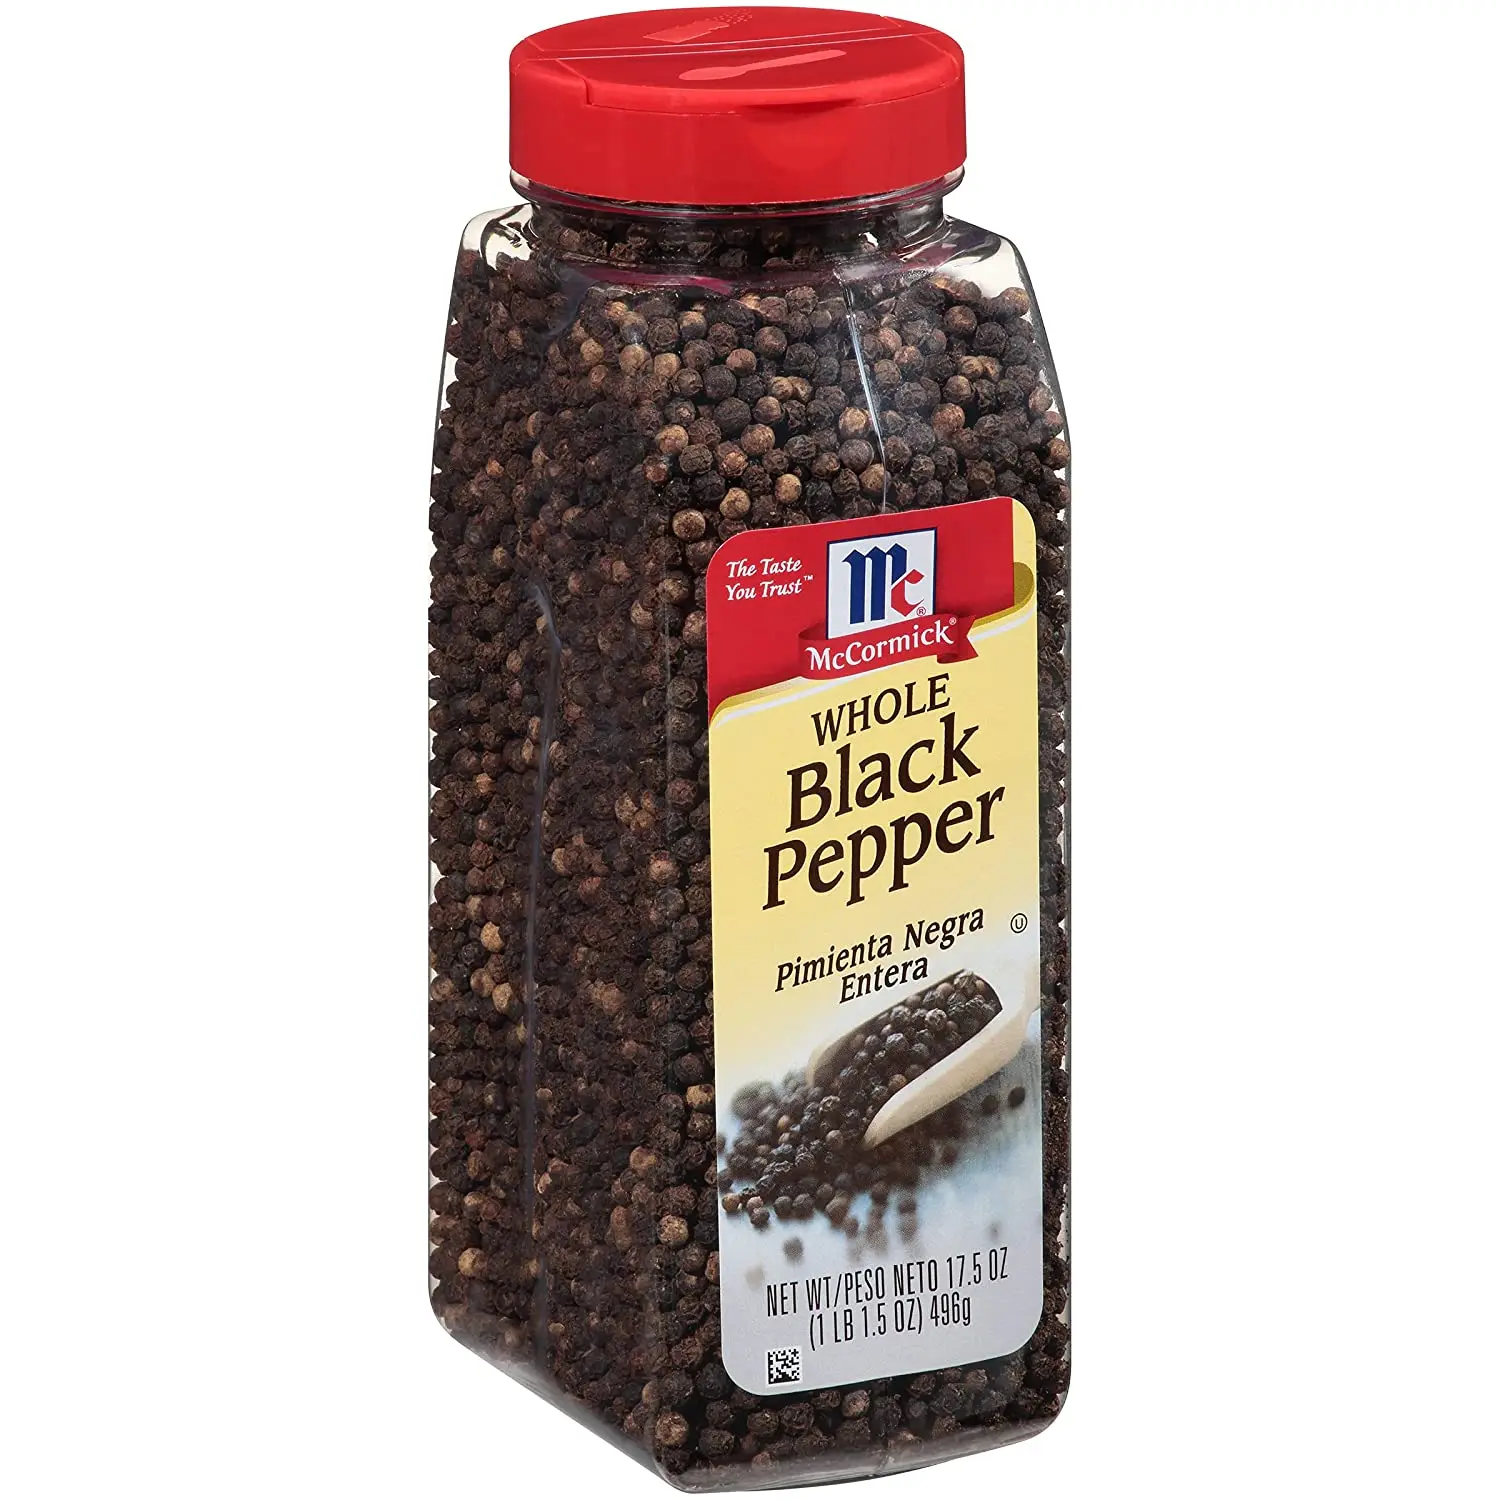 Organic Spicy Black Pepper with Best Price in Bulk Quantity Natural Vietnam Pepper Hot Selling Dried Black Pepper